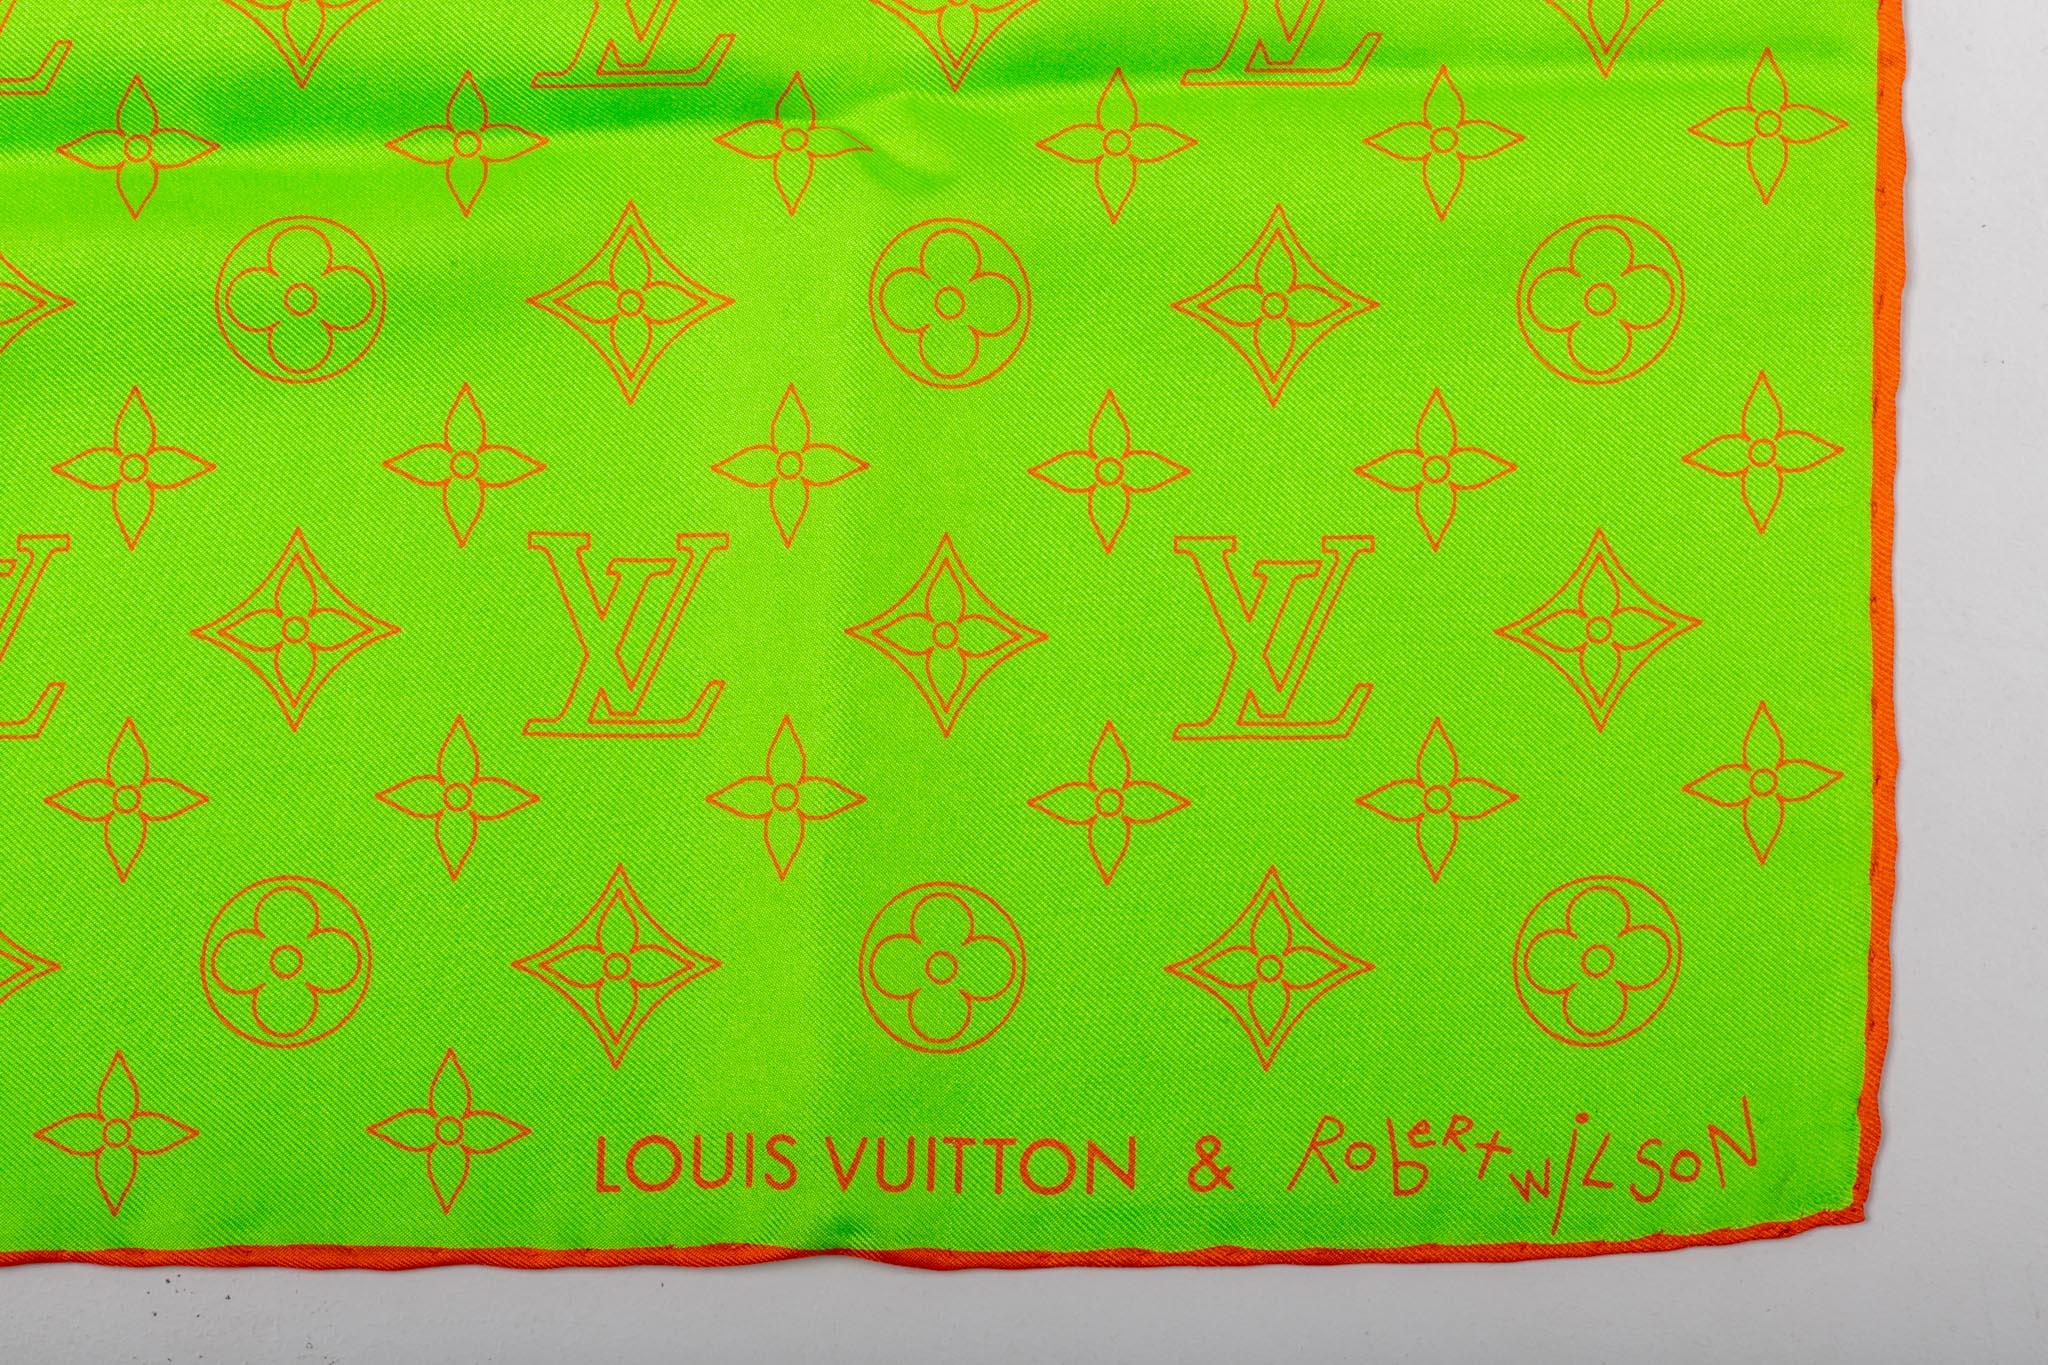 Louis Vuitton limited edition fluorescent silk scarf. Robert Wilson design. 2002 collection. Green and orange combination.